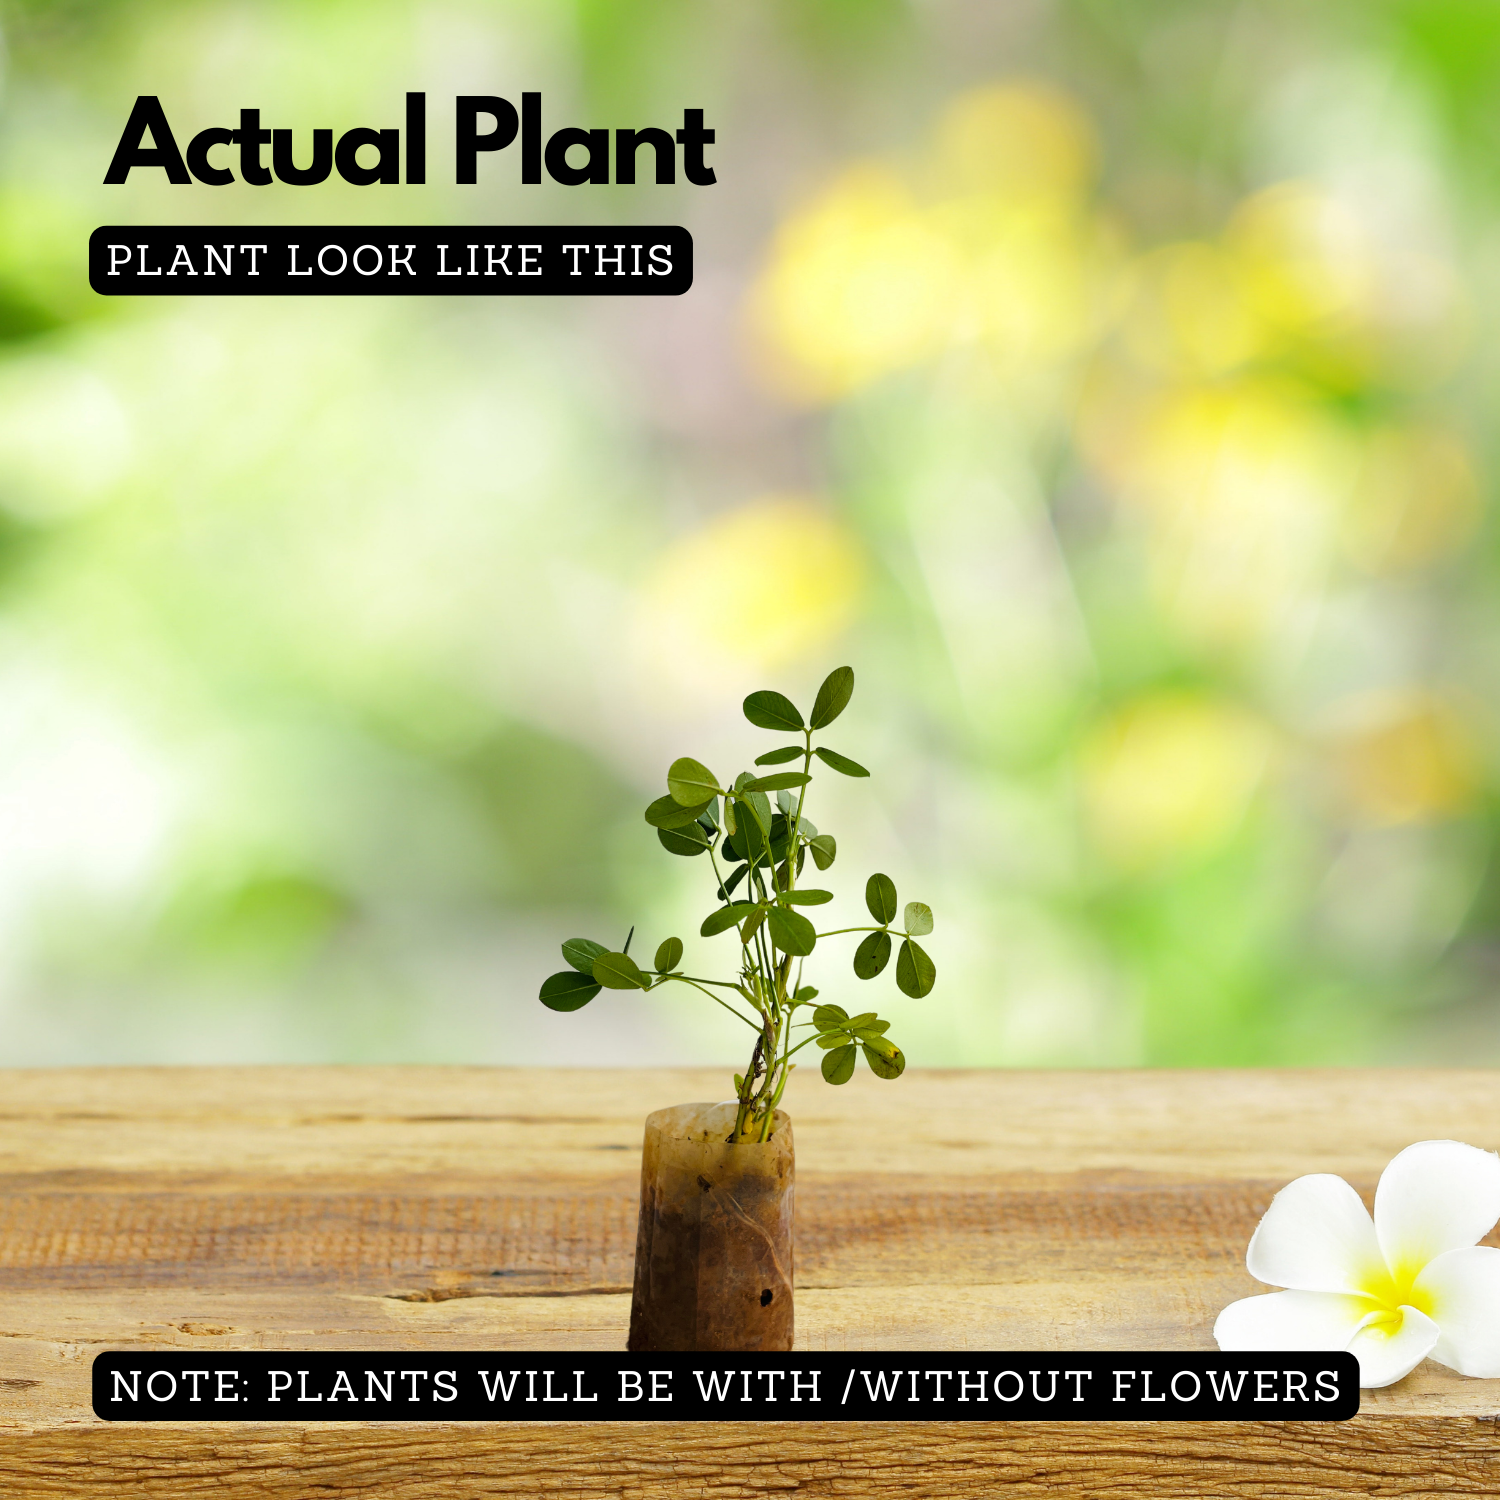 Peanut / Groundnut / Kappalndi (Arachis hypogaea) Fruit Live Plant (Home & Garden)(Pack Of 5)